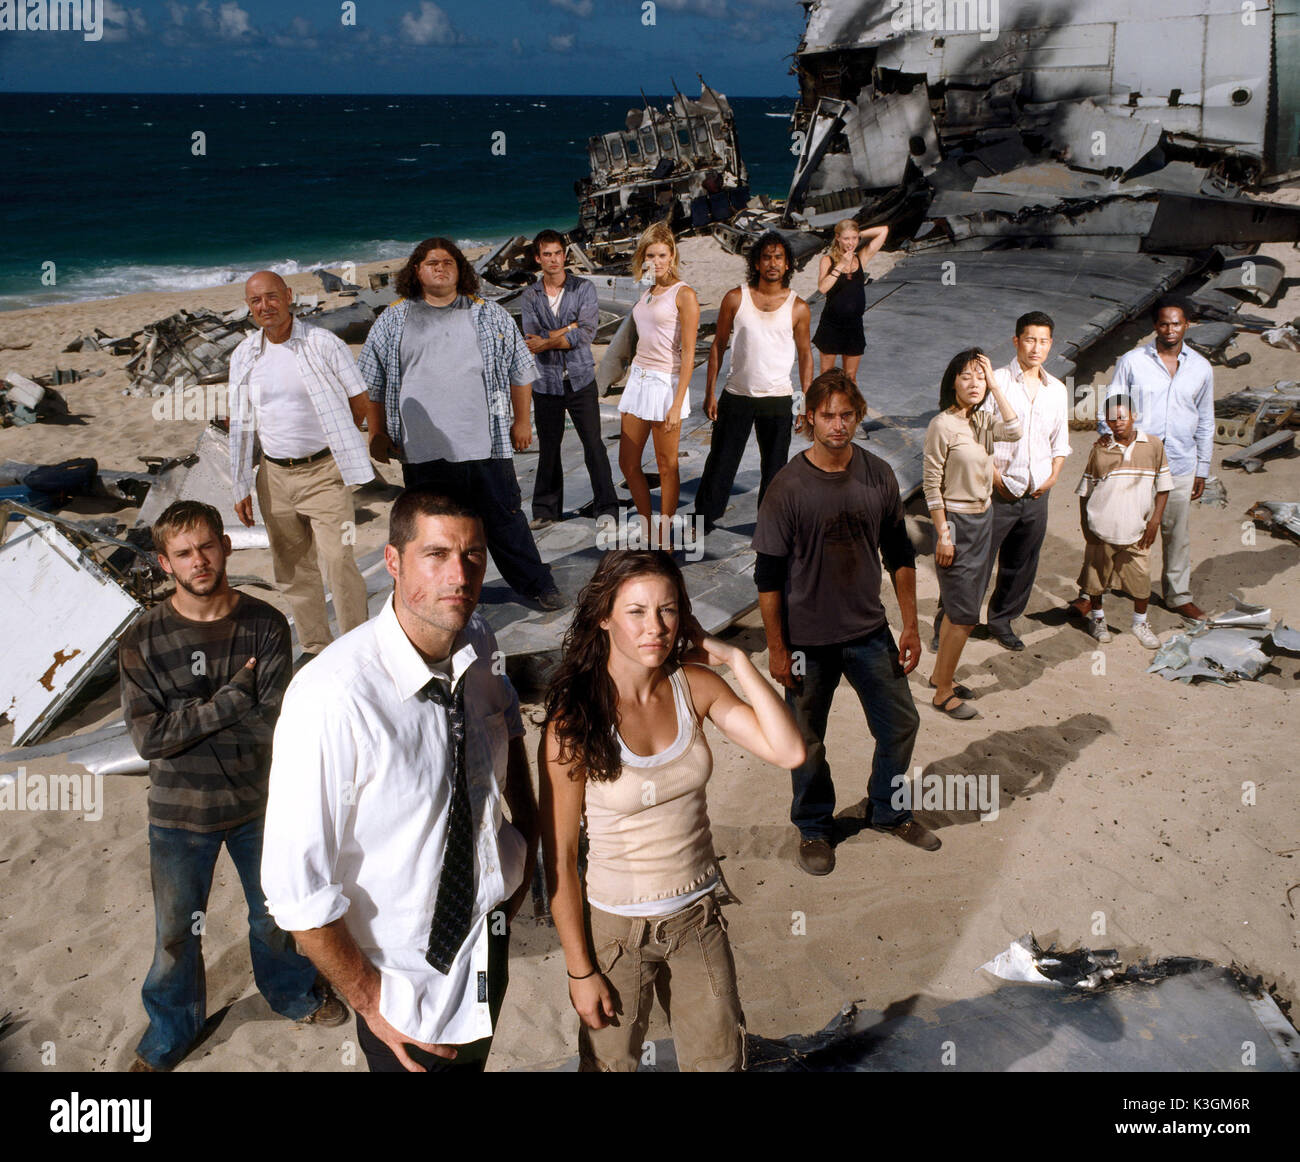 LOST [US TV SERIES 2004 - ]   Series #1   [background L-R]   TERRY O'QUINN as Locke,  JORGE GARCIA as Hurley,  IAN SOMERHALDER as Boone [2004-2005],  MAGGIE GRACE as Shannon [2004 -2005],  NAVEEN ANDREWS as Sayid,  EMILIE DE RAVIN as Claire  [foreground L-R]   DOMINIC MONAGHAN as Charlie,  MATTHEW FOX as Jack,  EVANGELINE LILLY as Kate,  JOSH HOLLOWAY as Sawyer,  DANIEL DAE KIM as Jin,  YUNJIN KIM [aka YOON-JIN KIM]  as Sun,  MALCOLM DAVID KELLEY as Walt,  HAROLD PERRINEAU as Michael Stock Photo